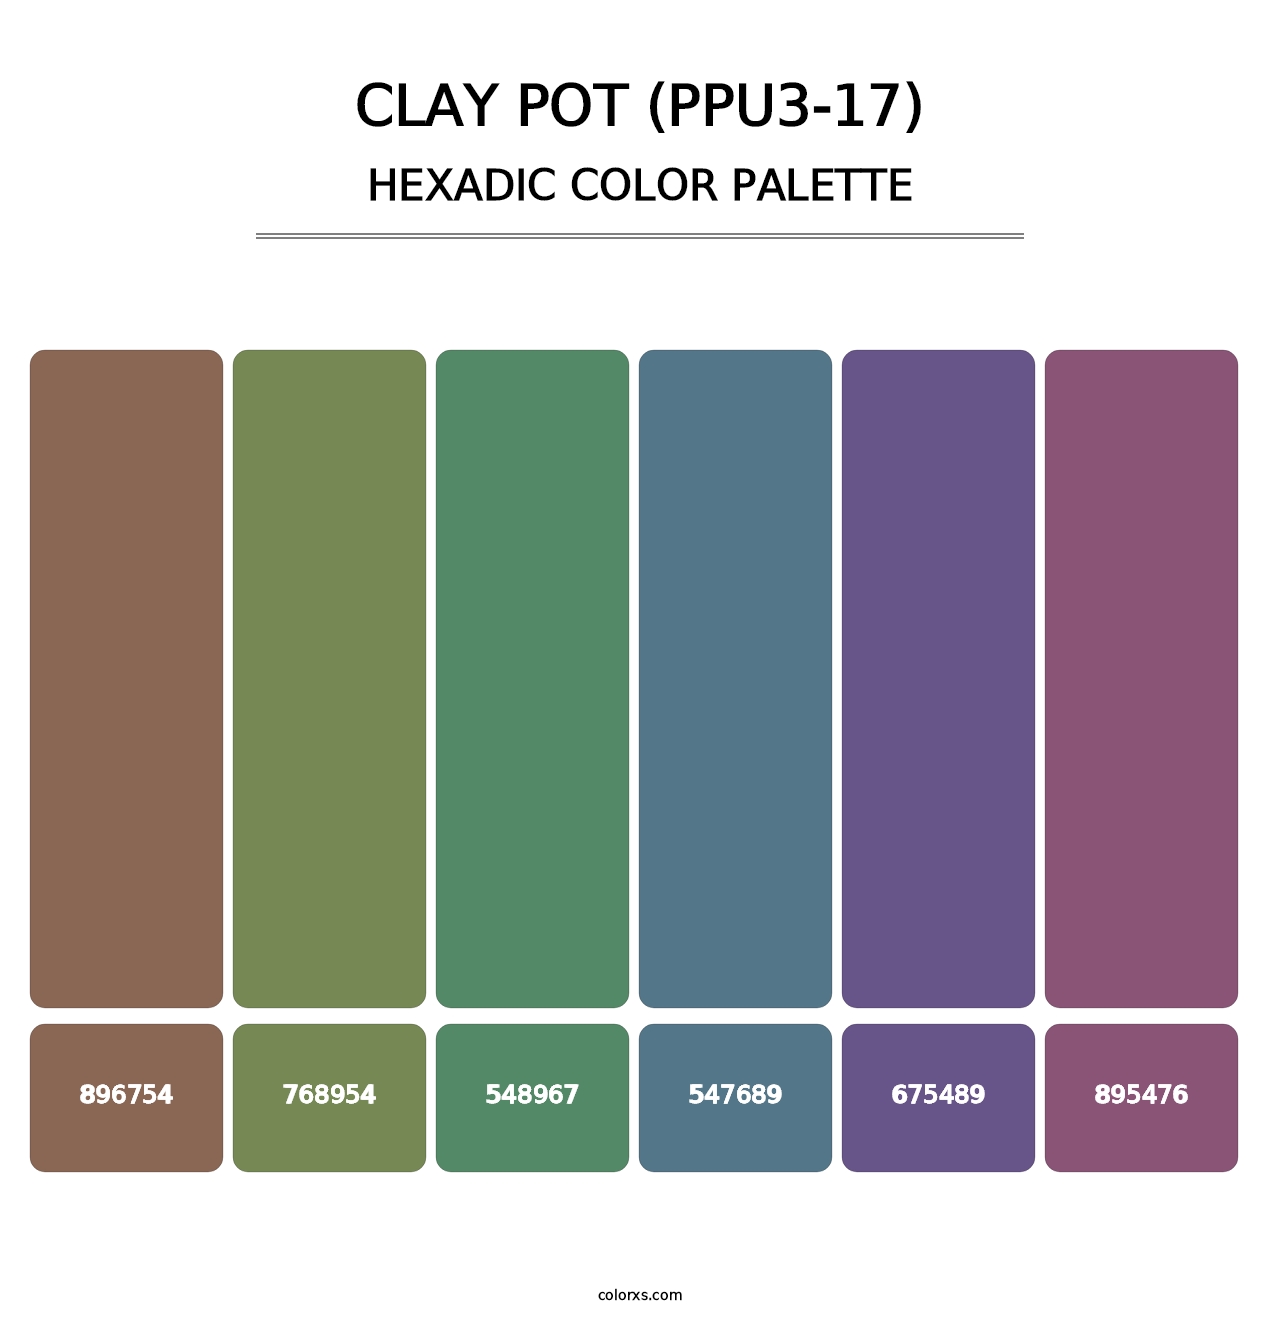 Clay Pot (PPU3-17) - Hexadic Color Palette